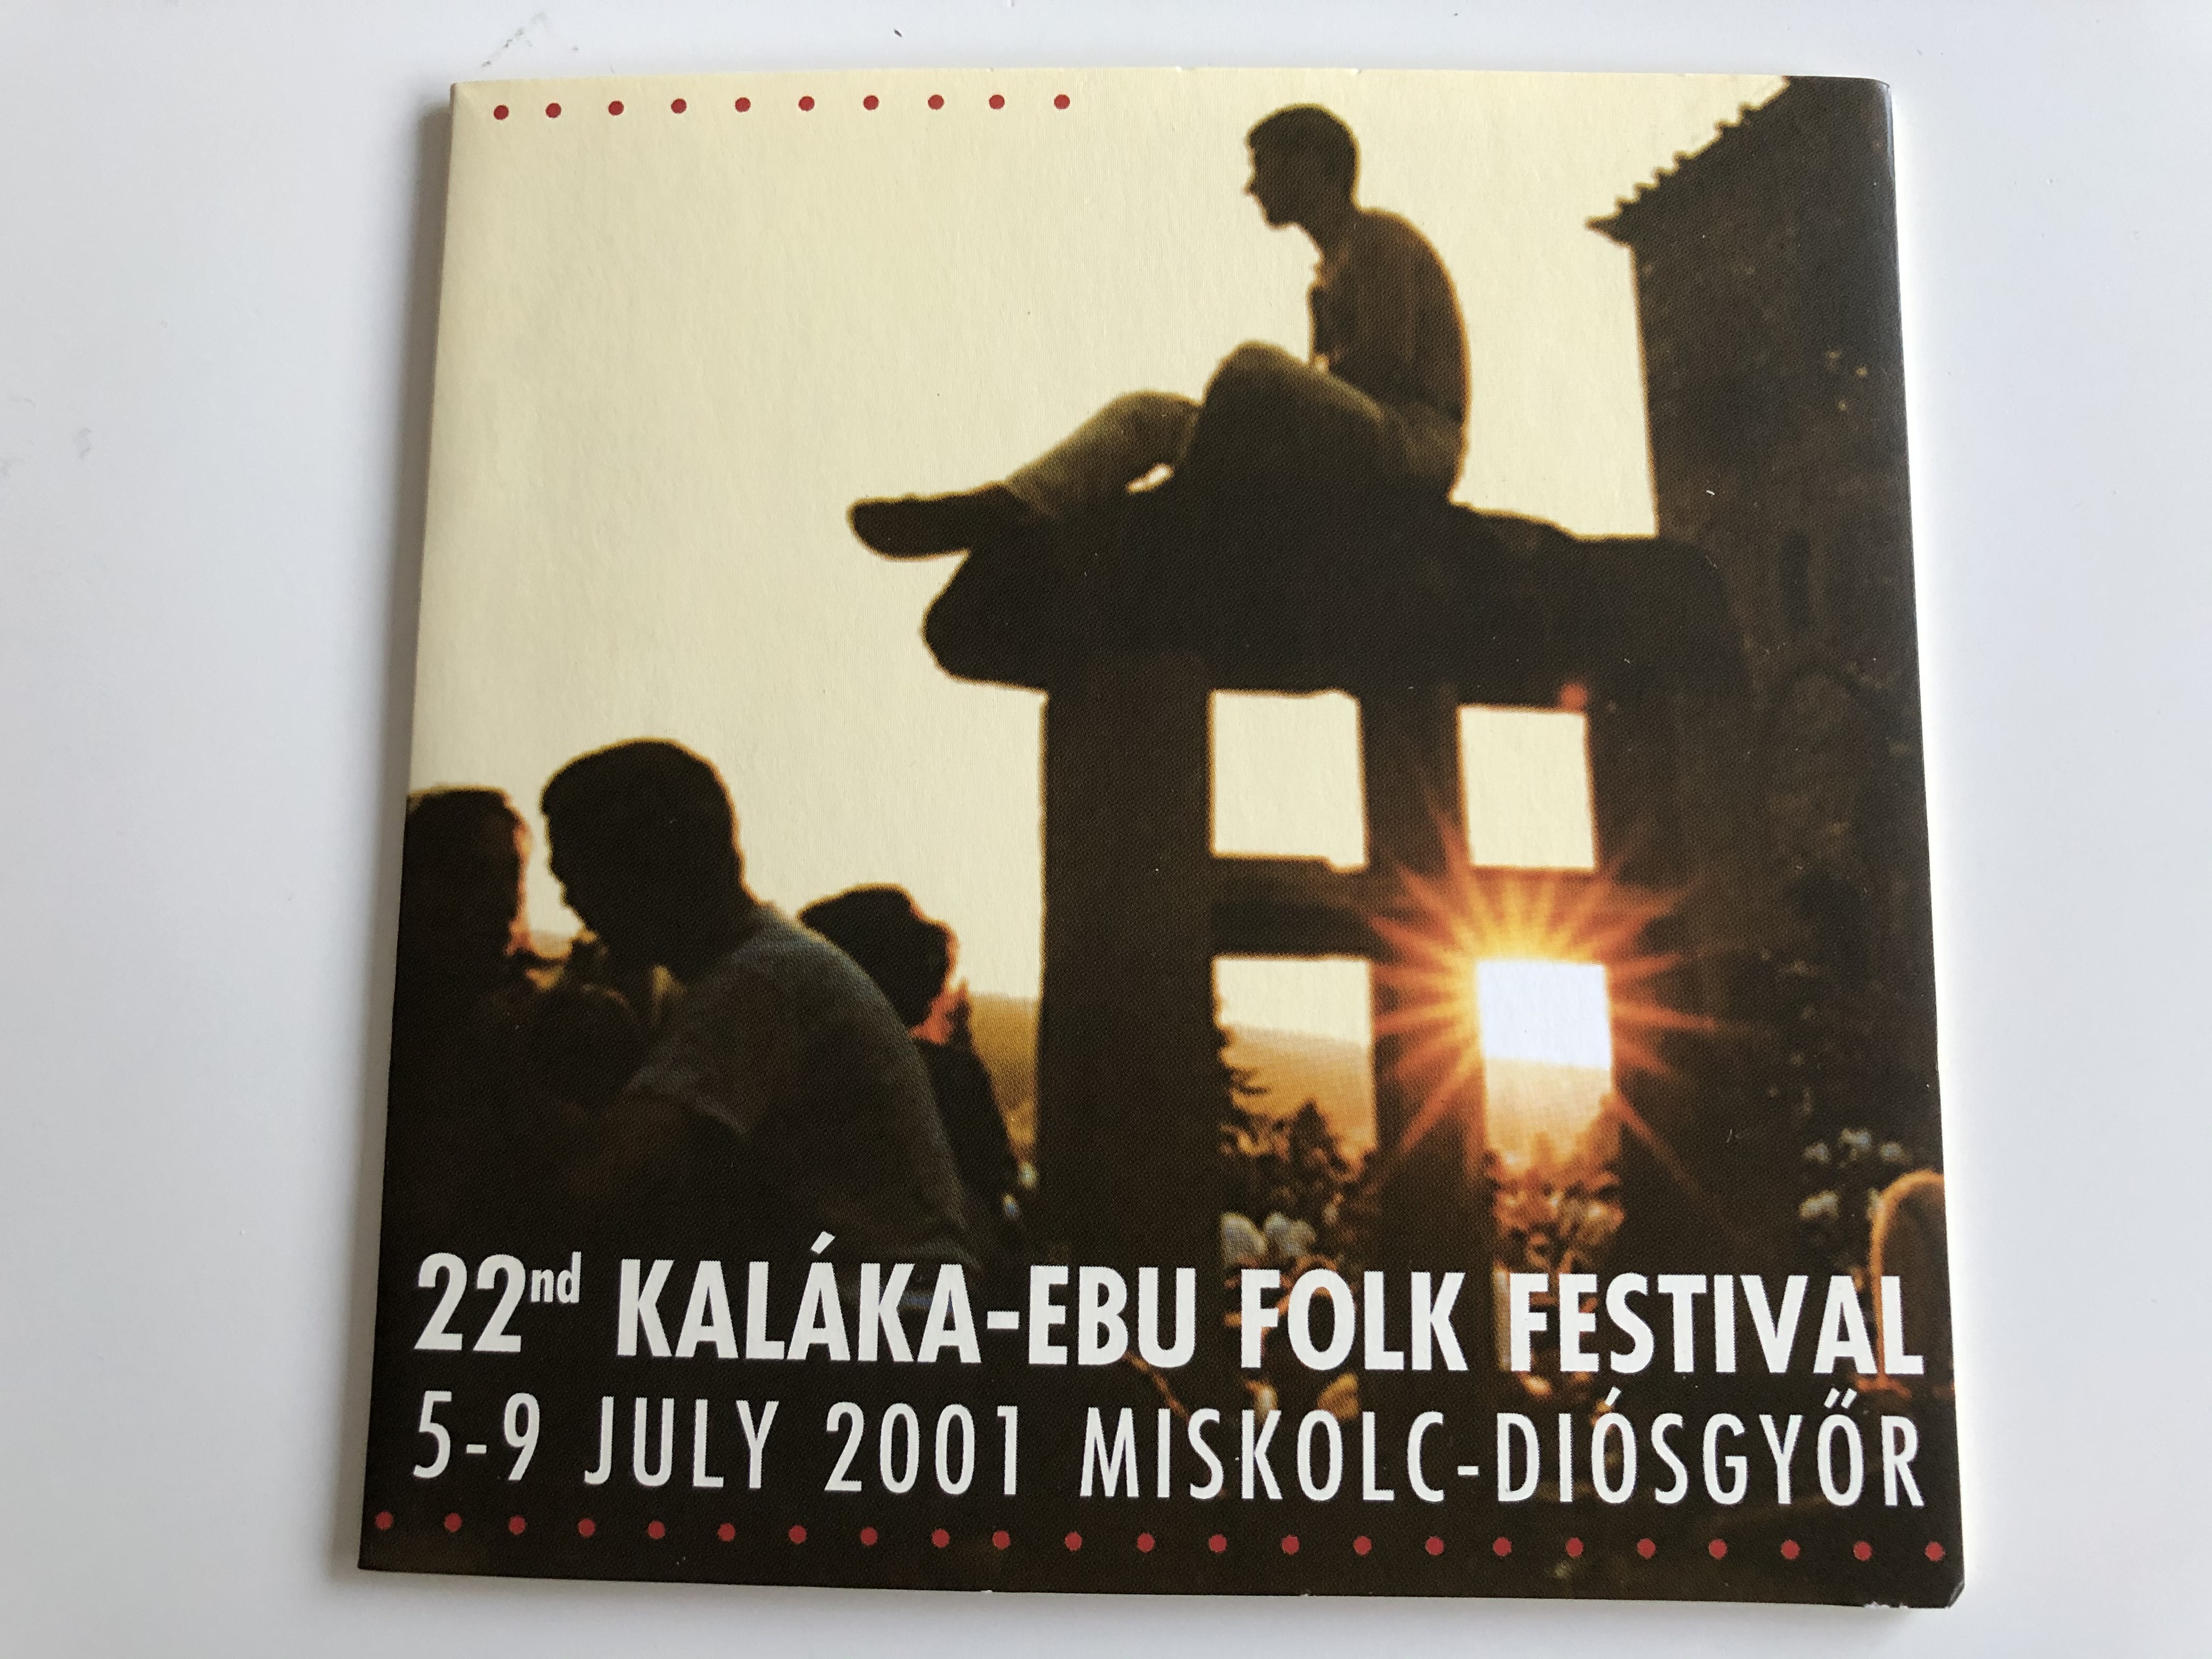 22nd-kalaka-ebu-folk-festival-5-9-july-2001-miskolc-diosgyor-gryllus-audio-cd-2001-gcd-027-1-.jpg